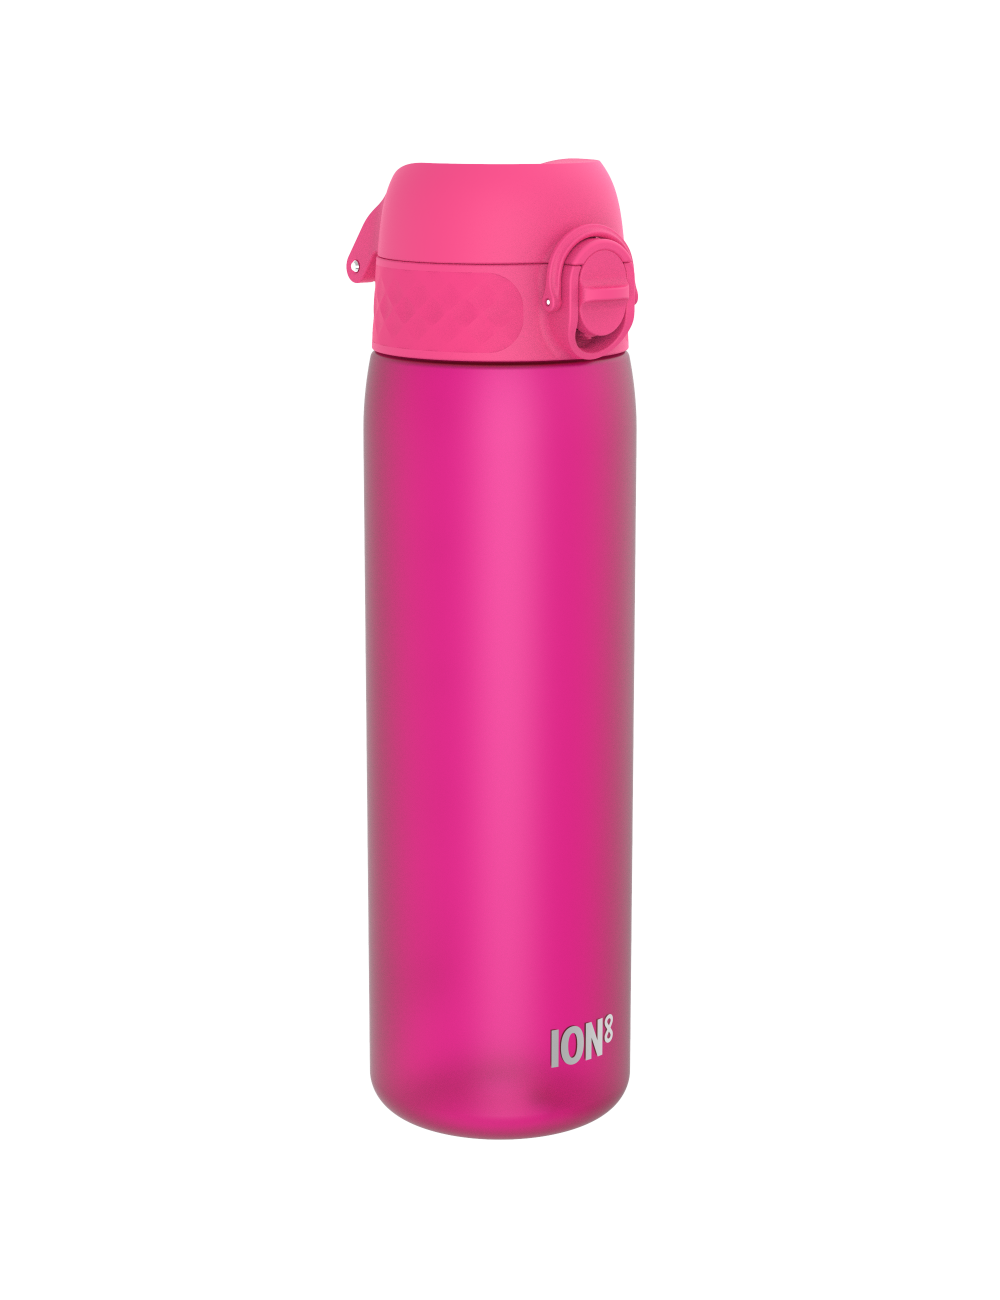 Butelka ION8 BPA Free Pink 500 ml